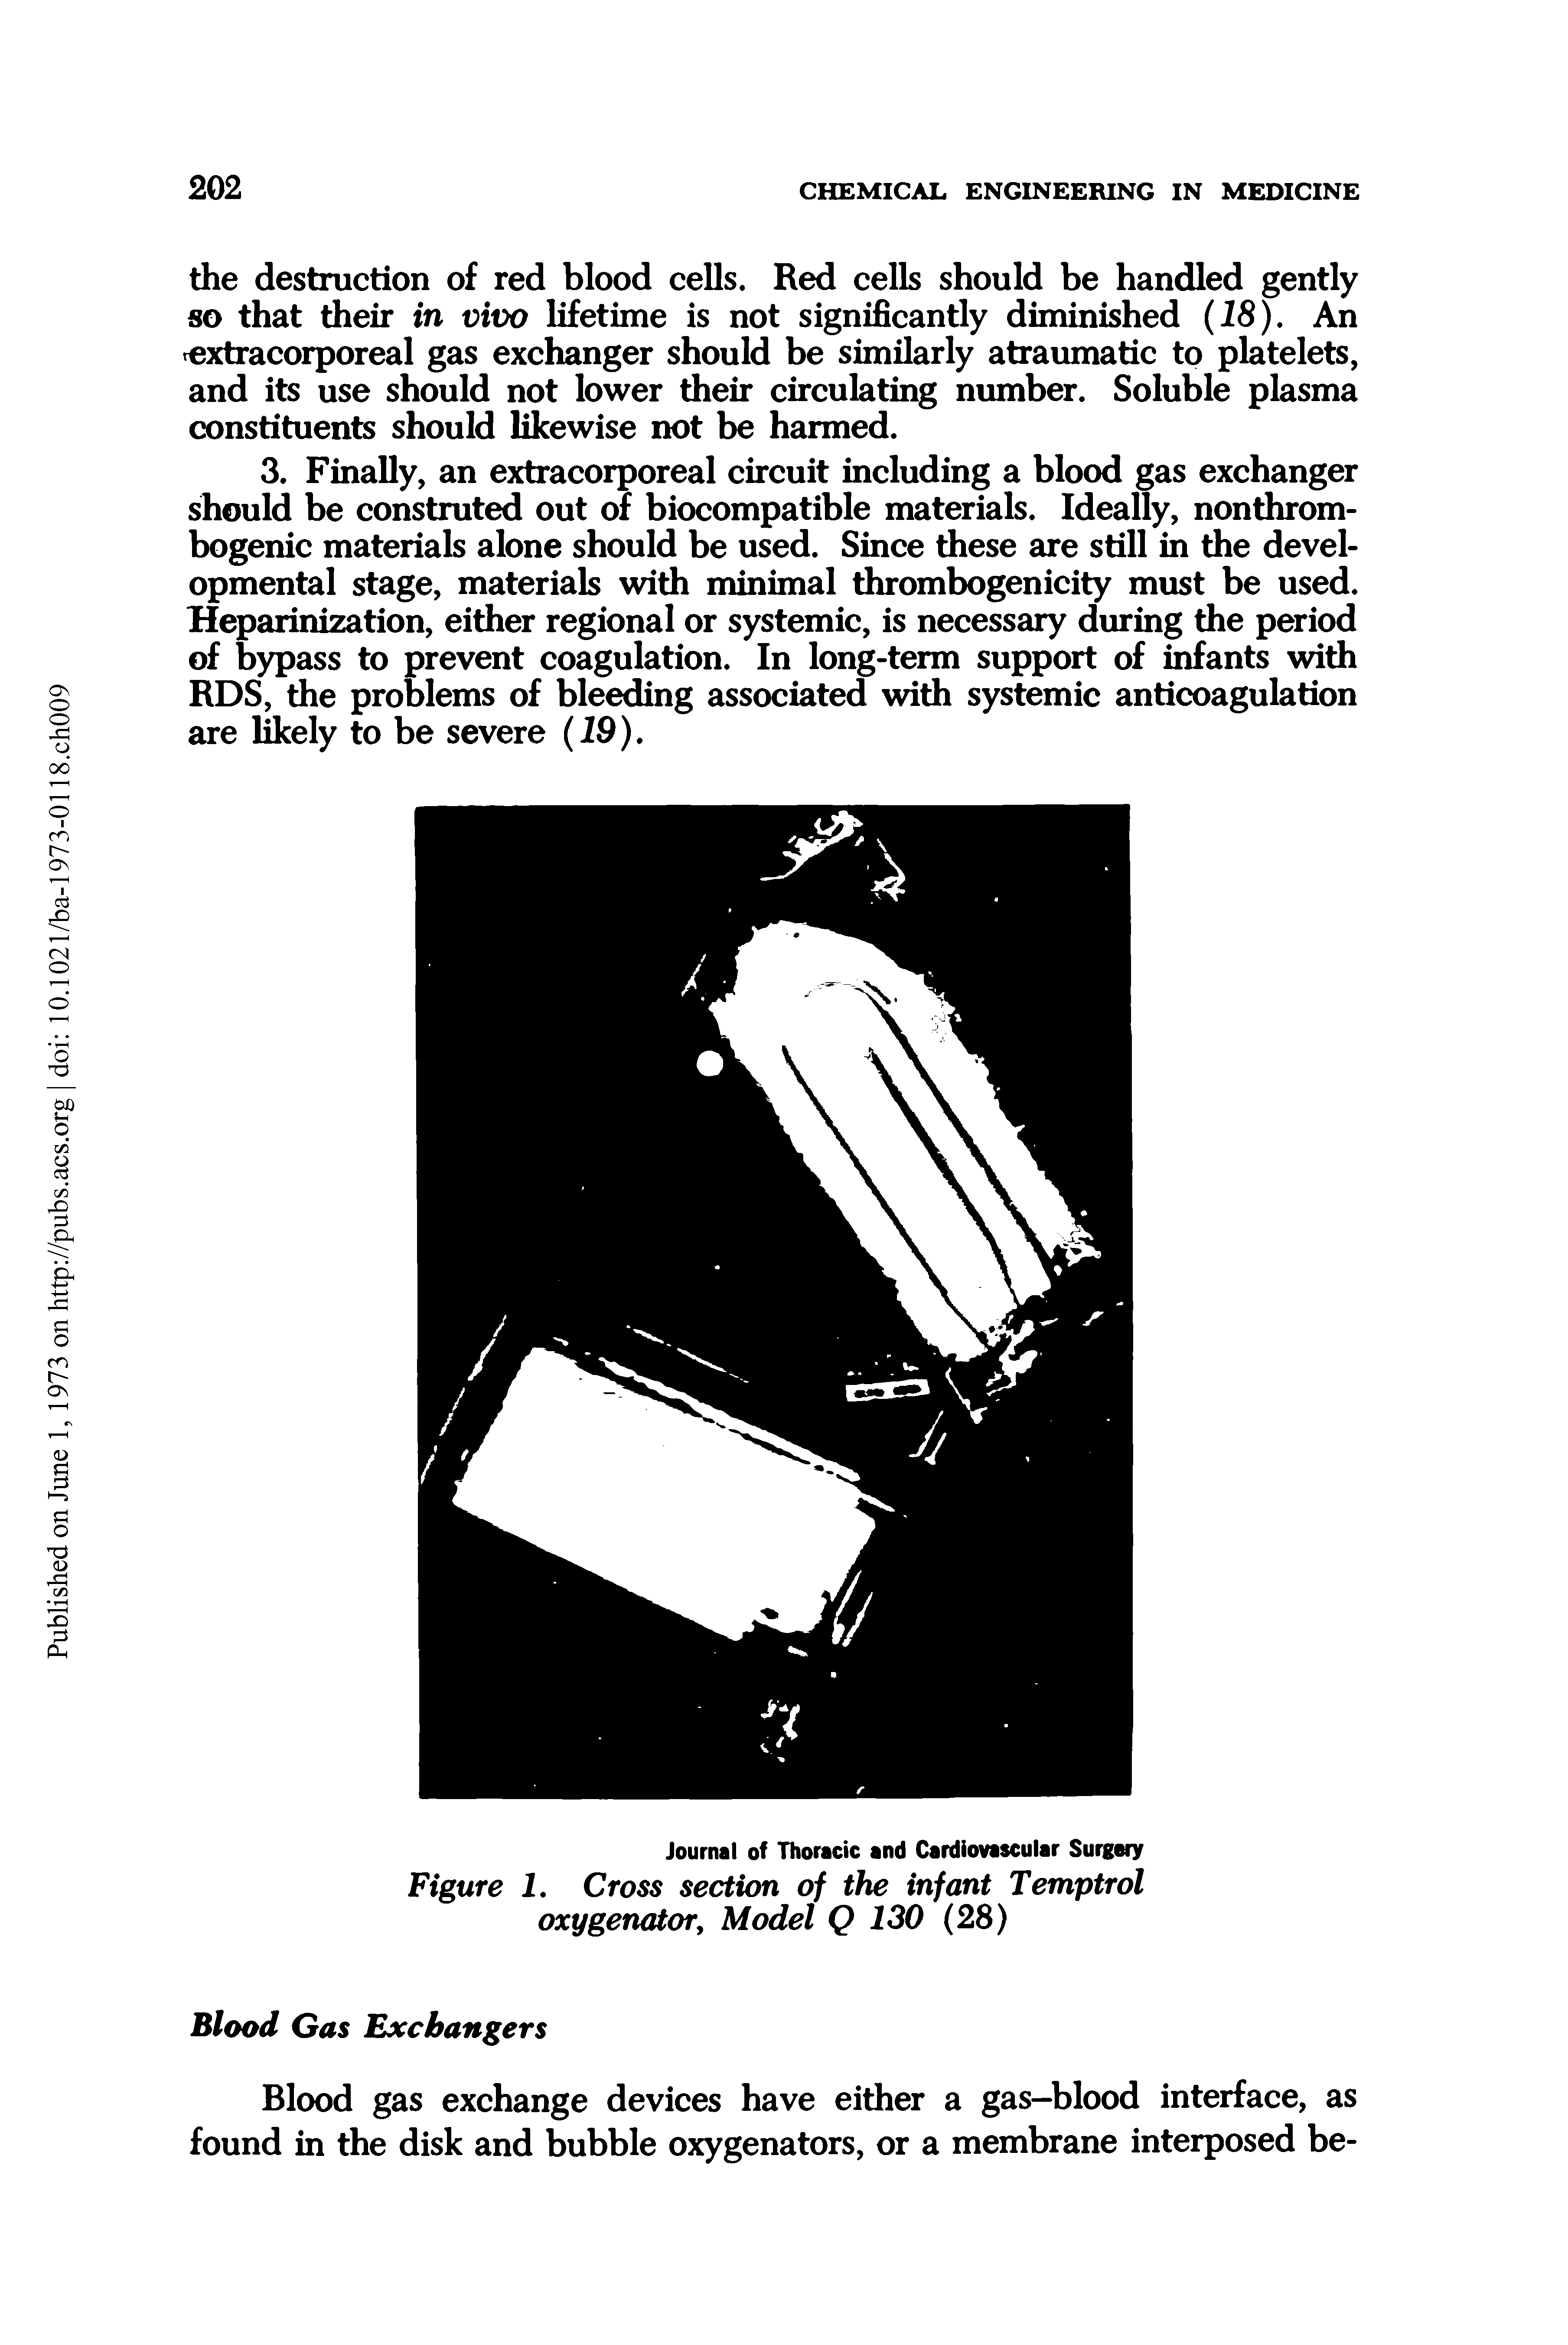 Figure 1. Cross section of the infant Temptrol oxygenator, Model Q 130 (28)...